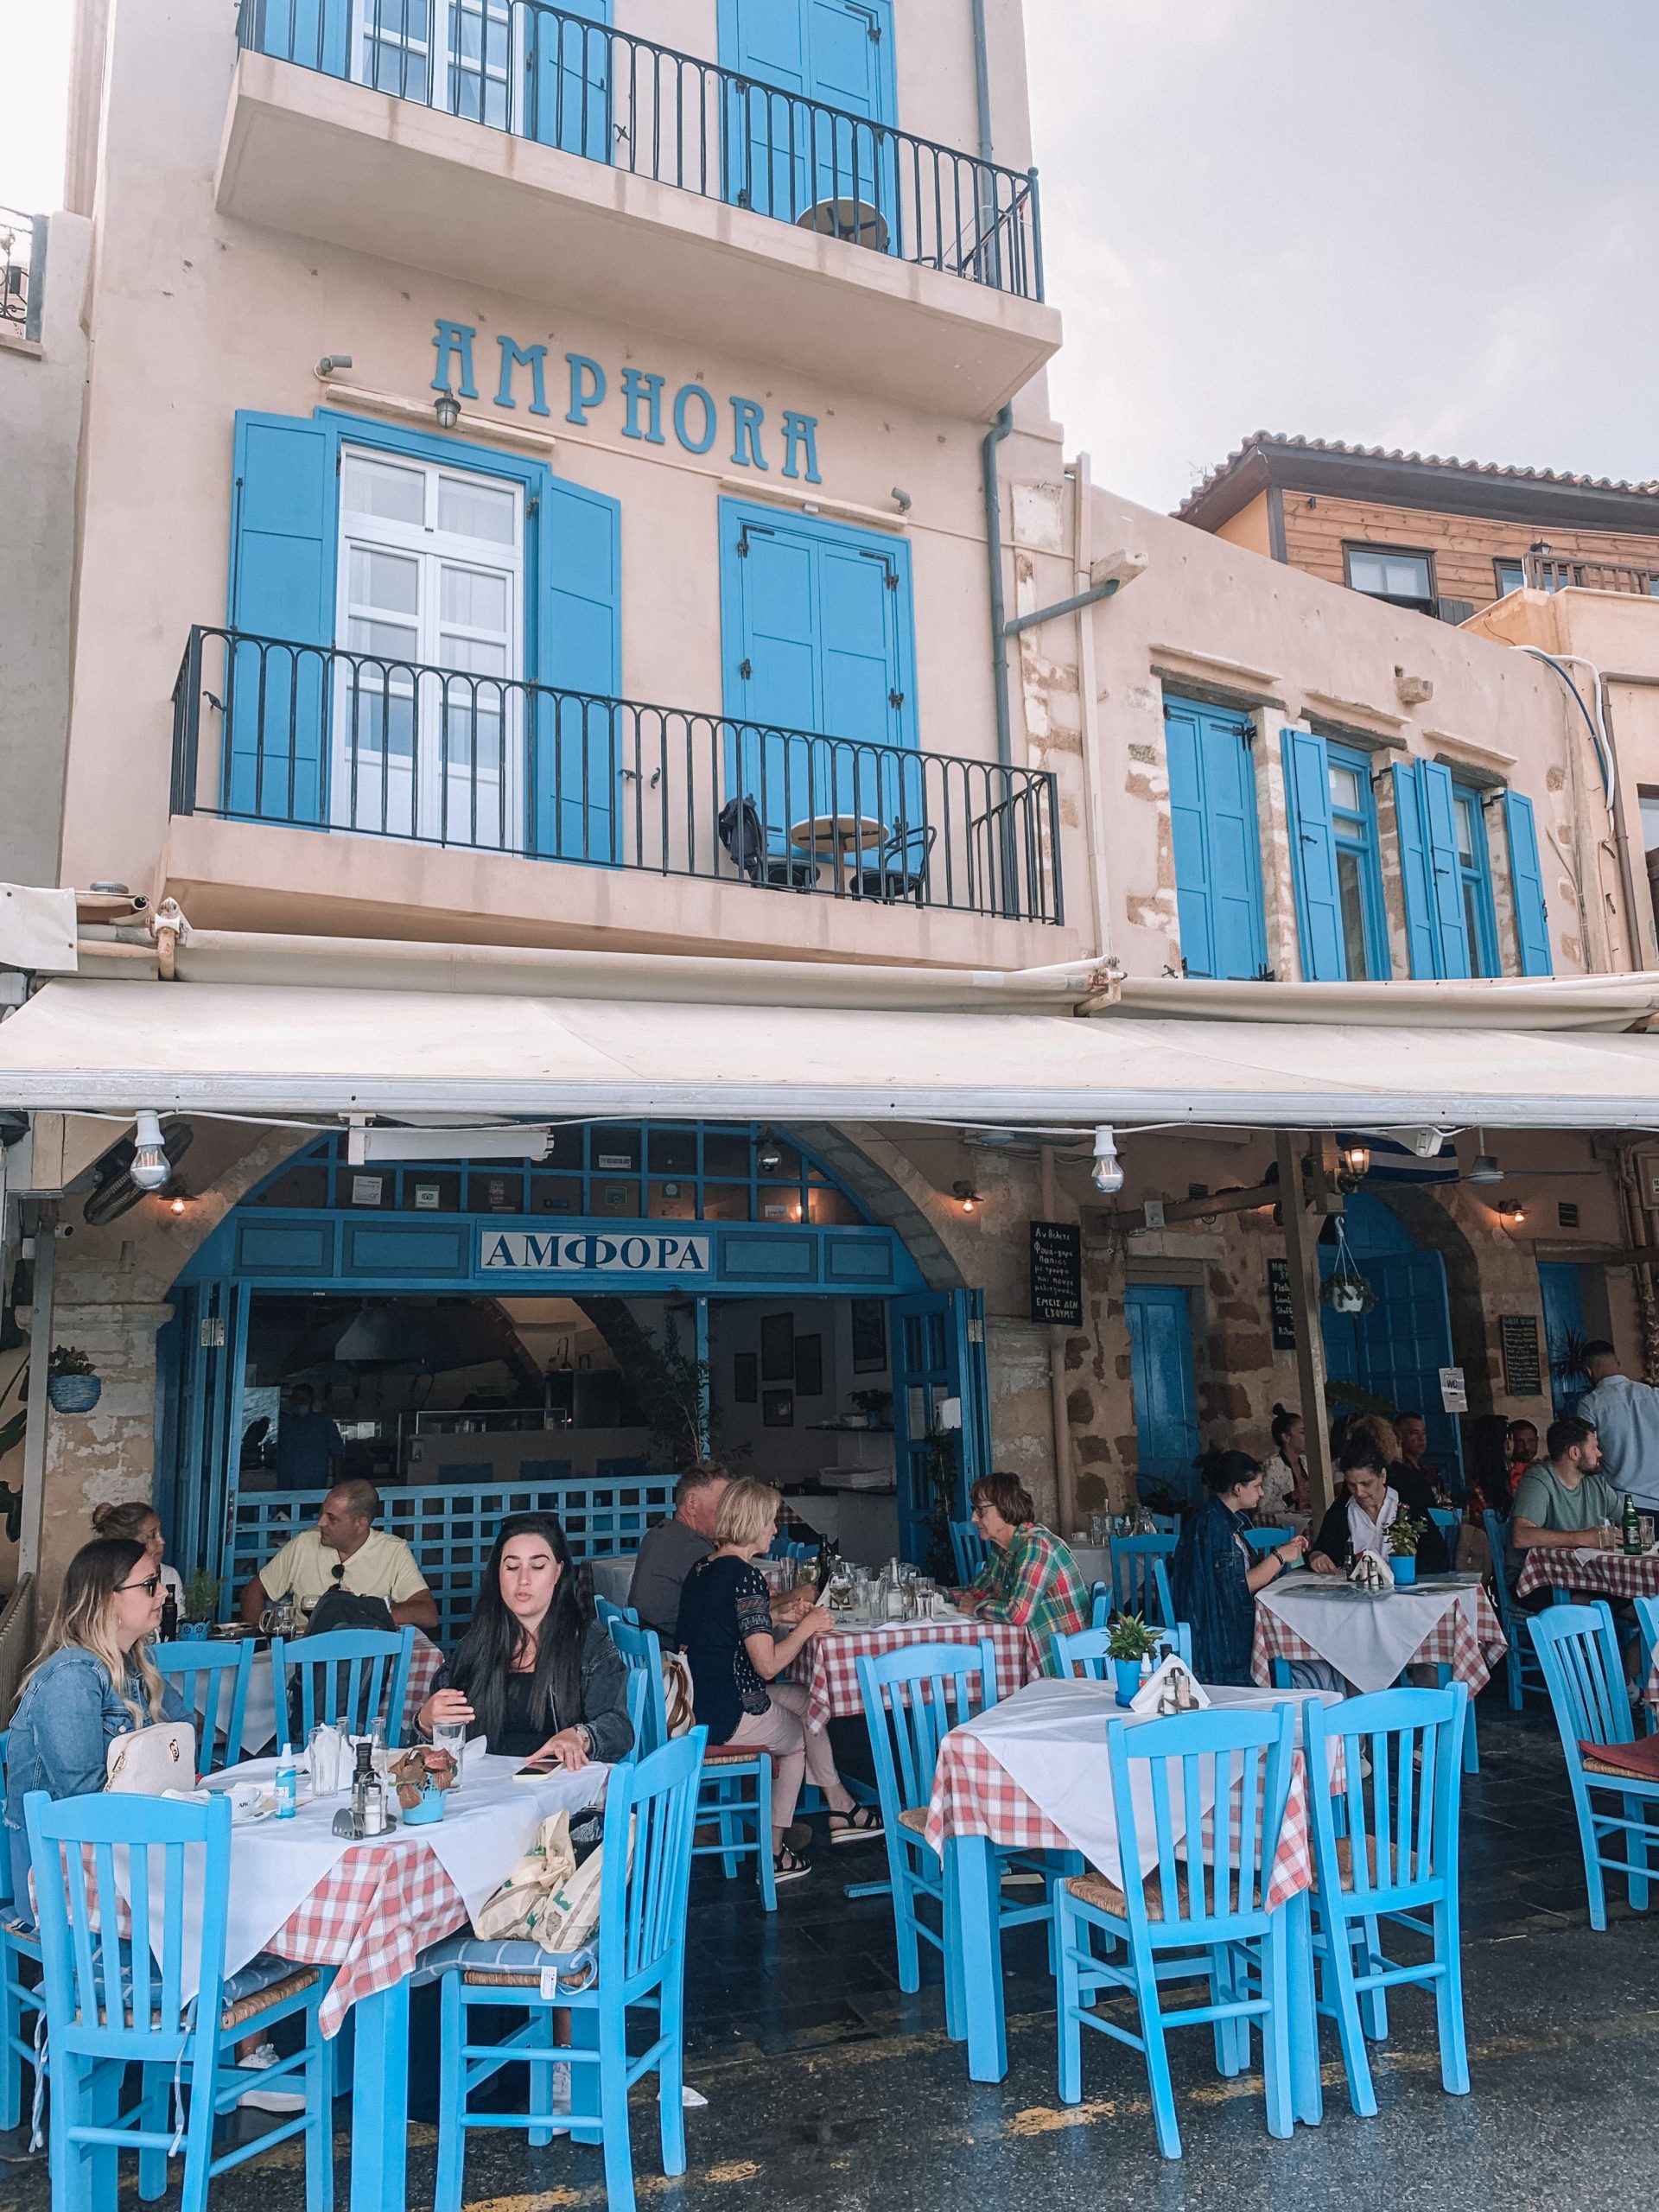 Chania’s Venetian Harbour, Crete Greece, Amphora restaurant